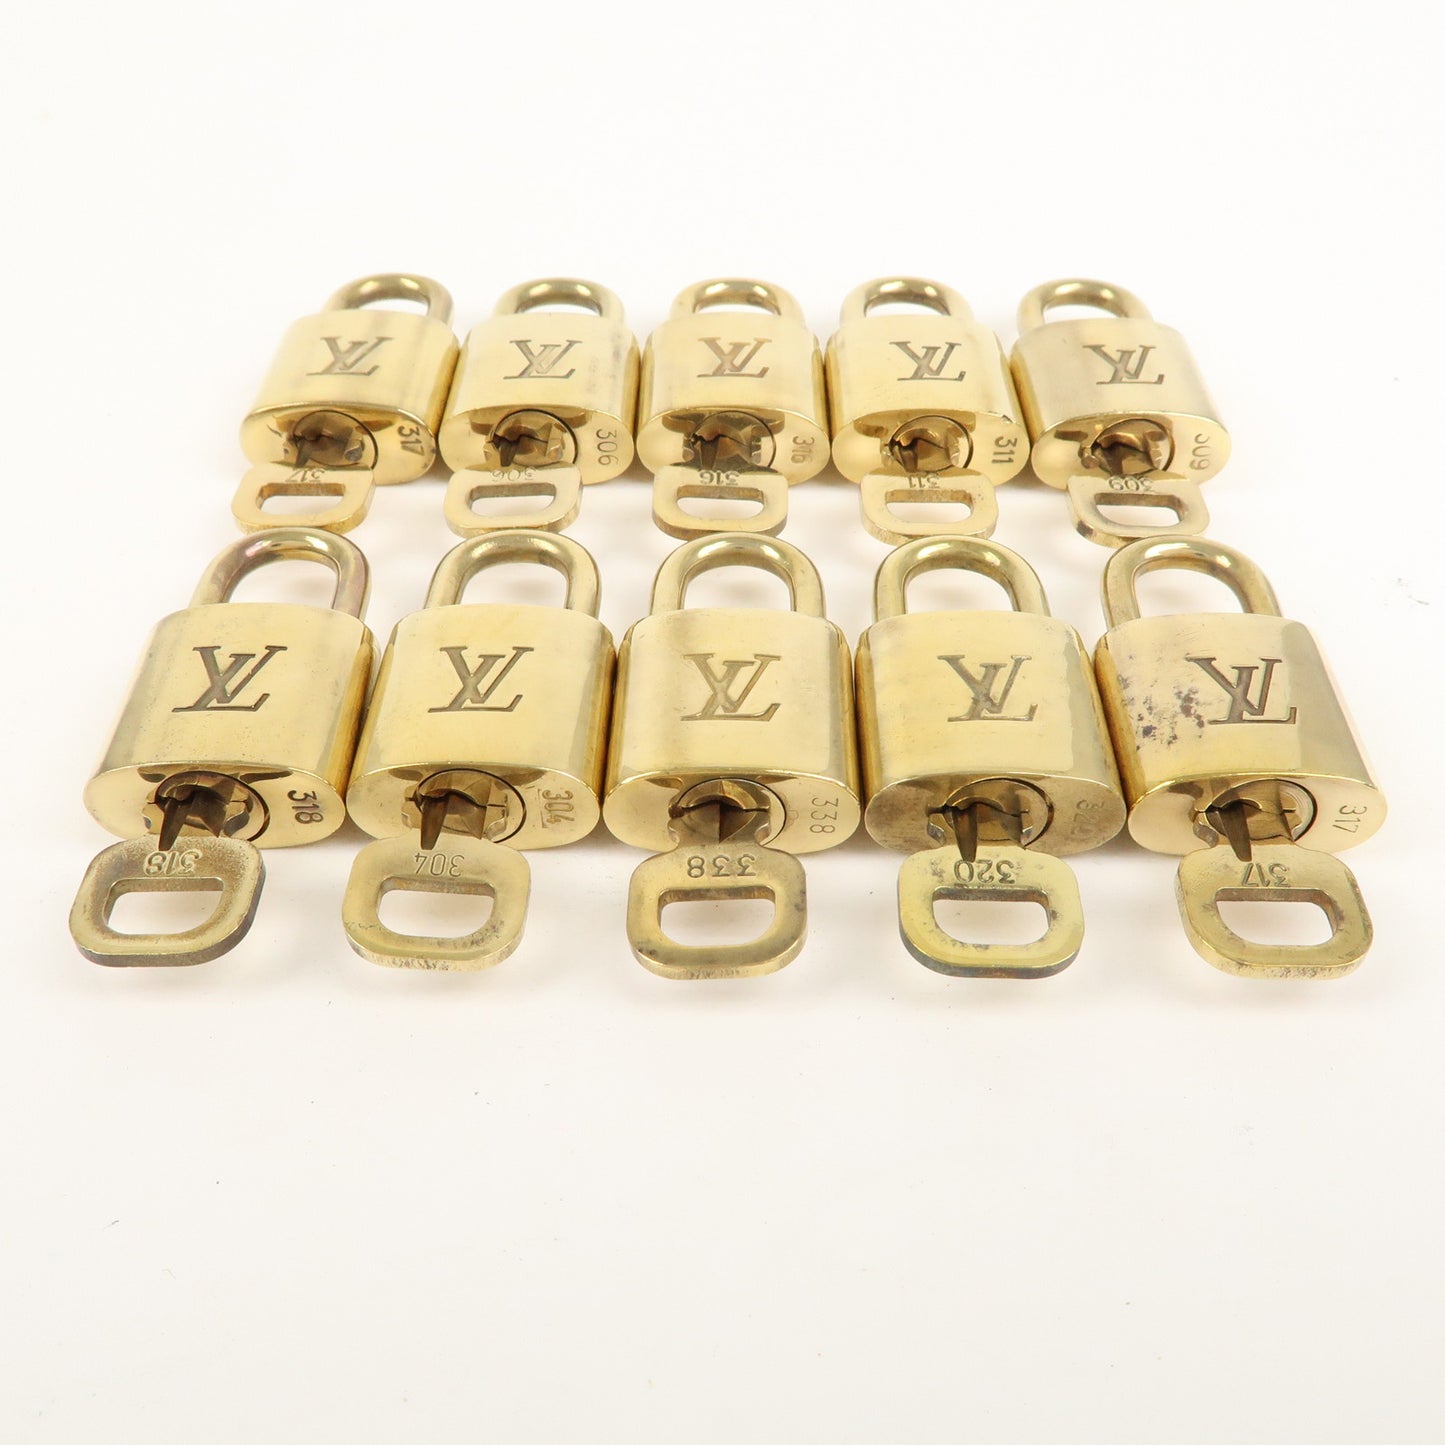 Increase quantity for Louis Vuitton Set of 10 Lock & Key Cadena